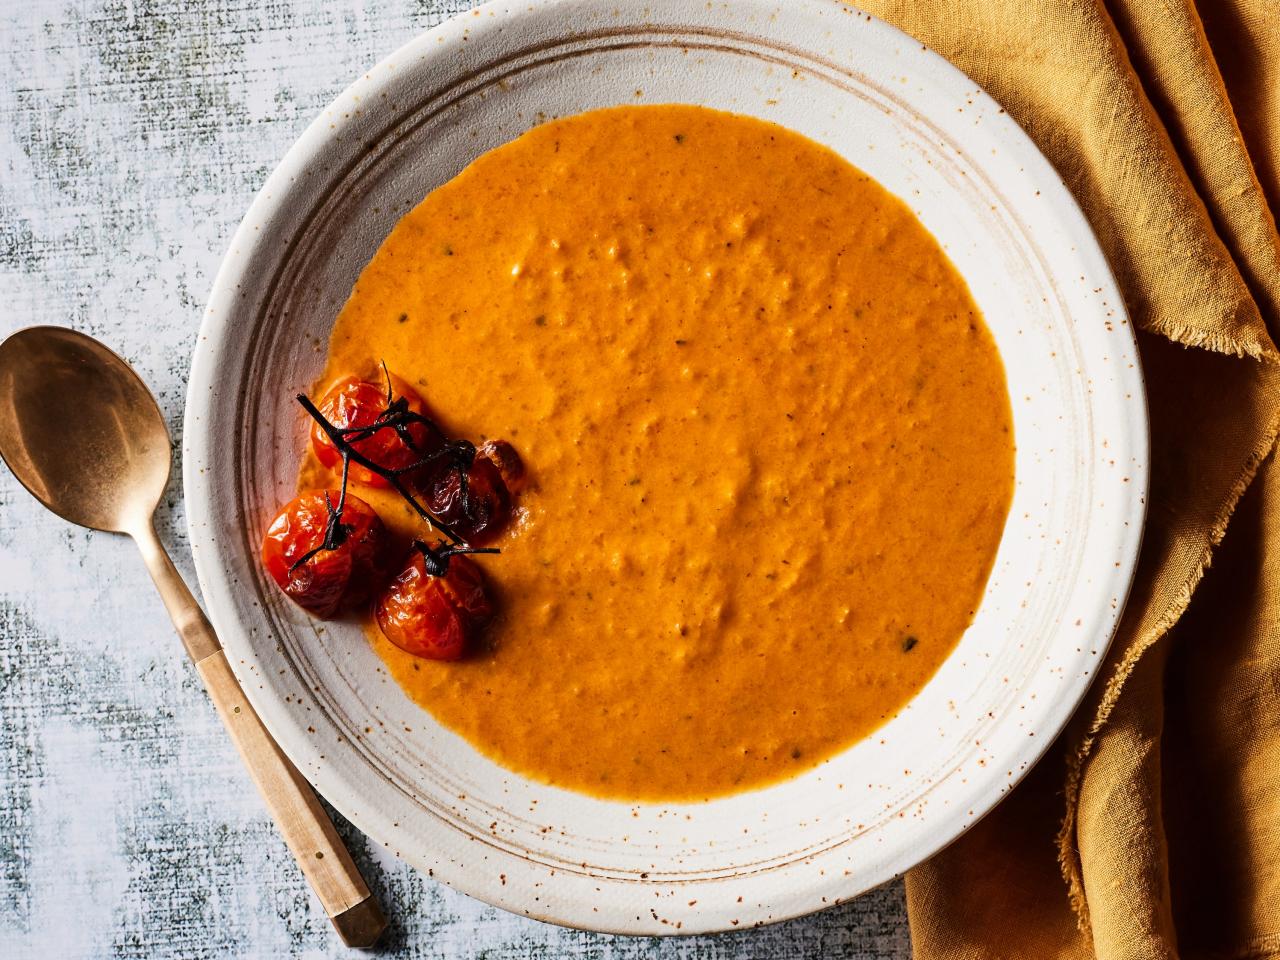 spicy tomato soup recipe, Indian creamy tomato soup, roasted garlic  tomato soup